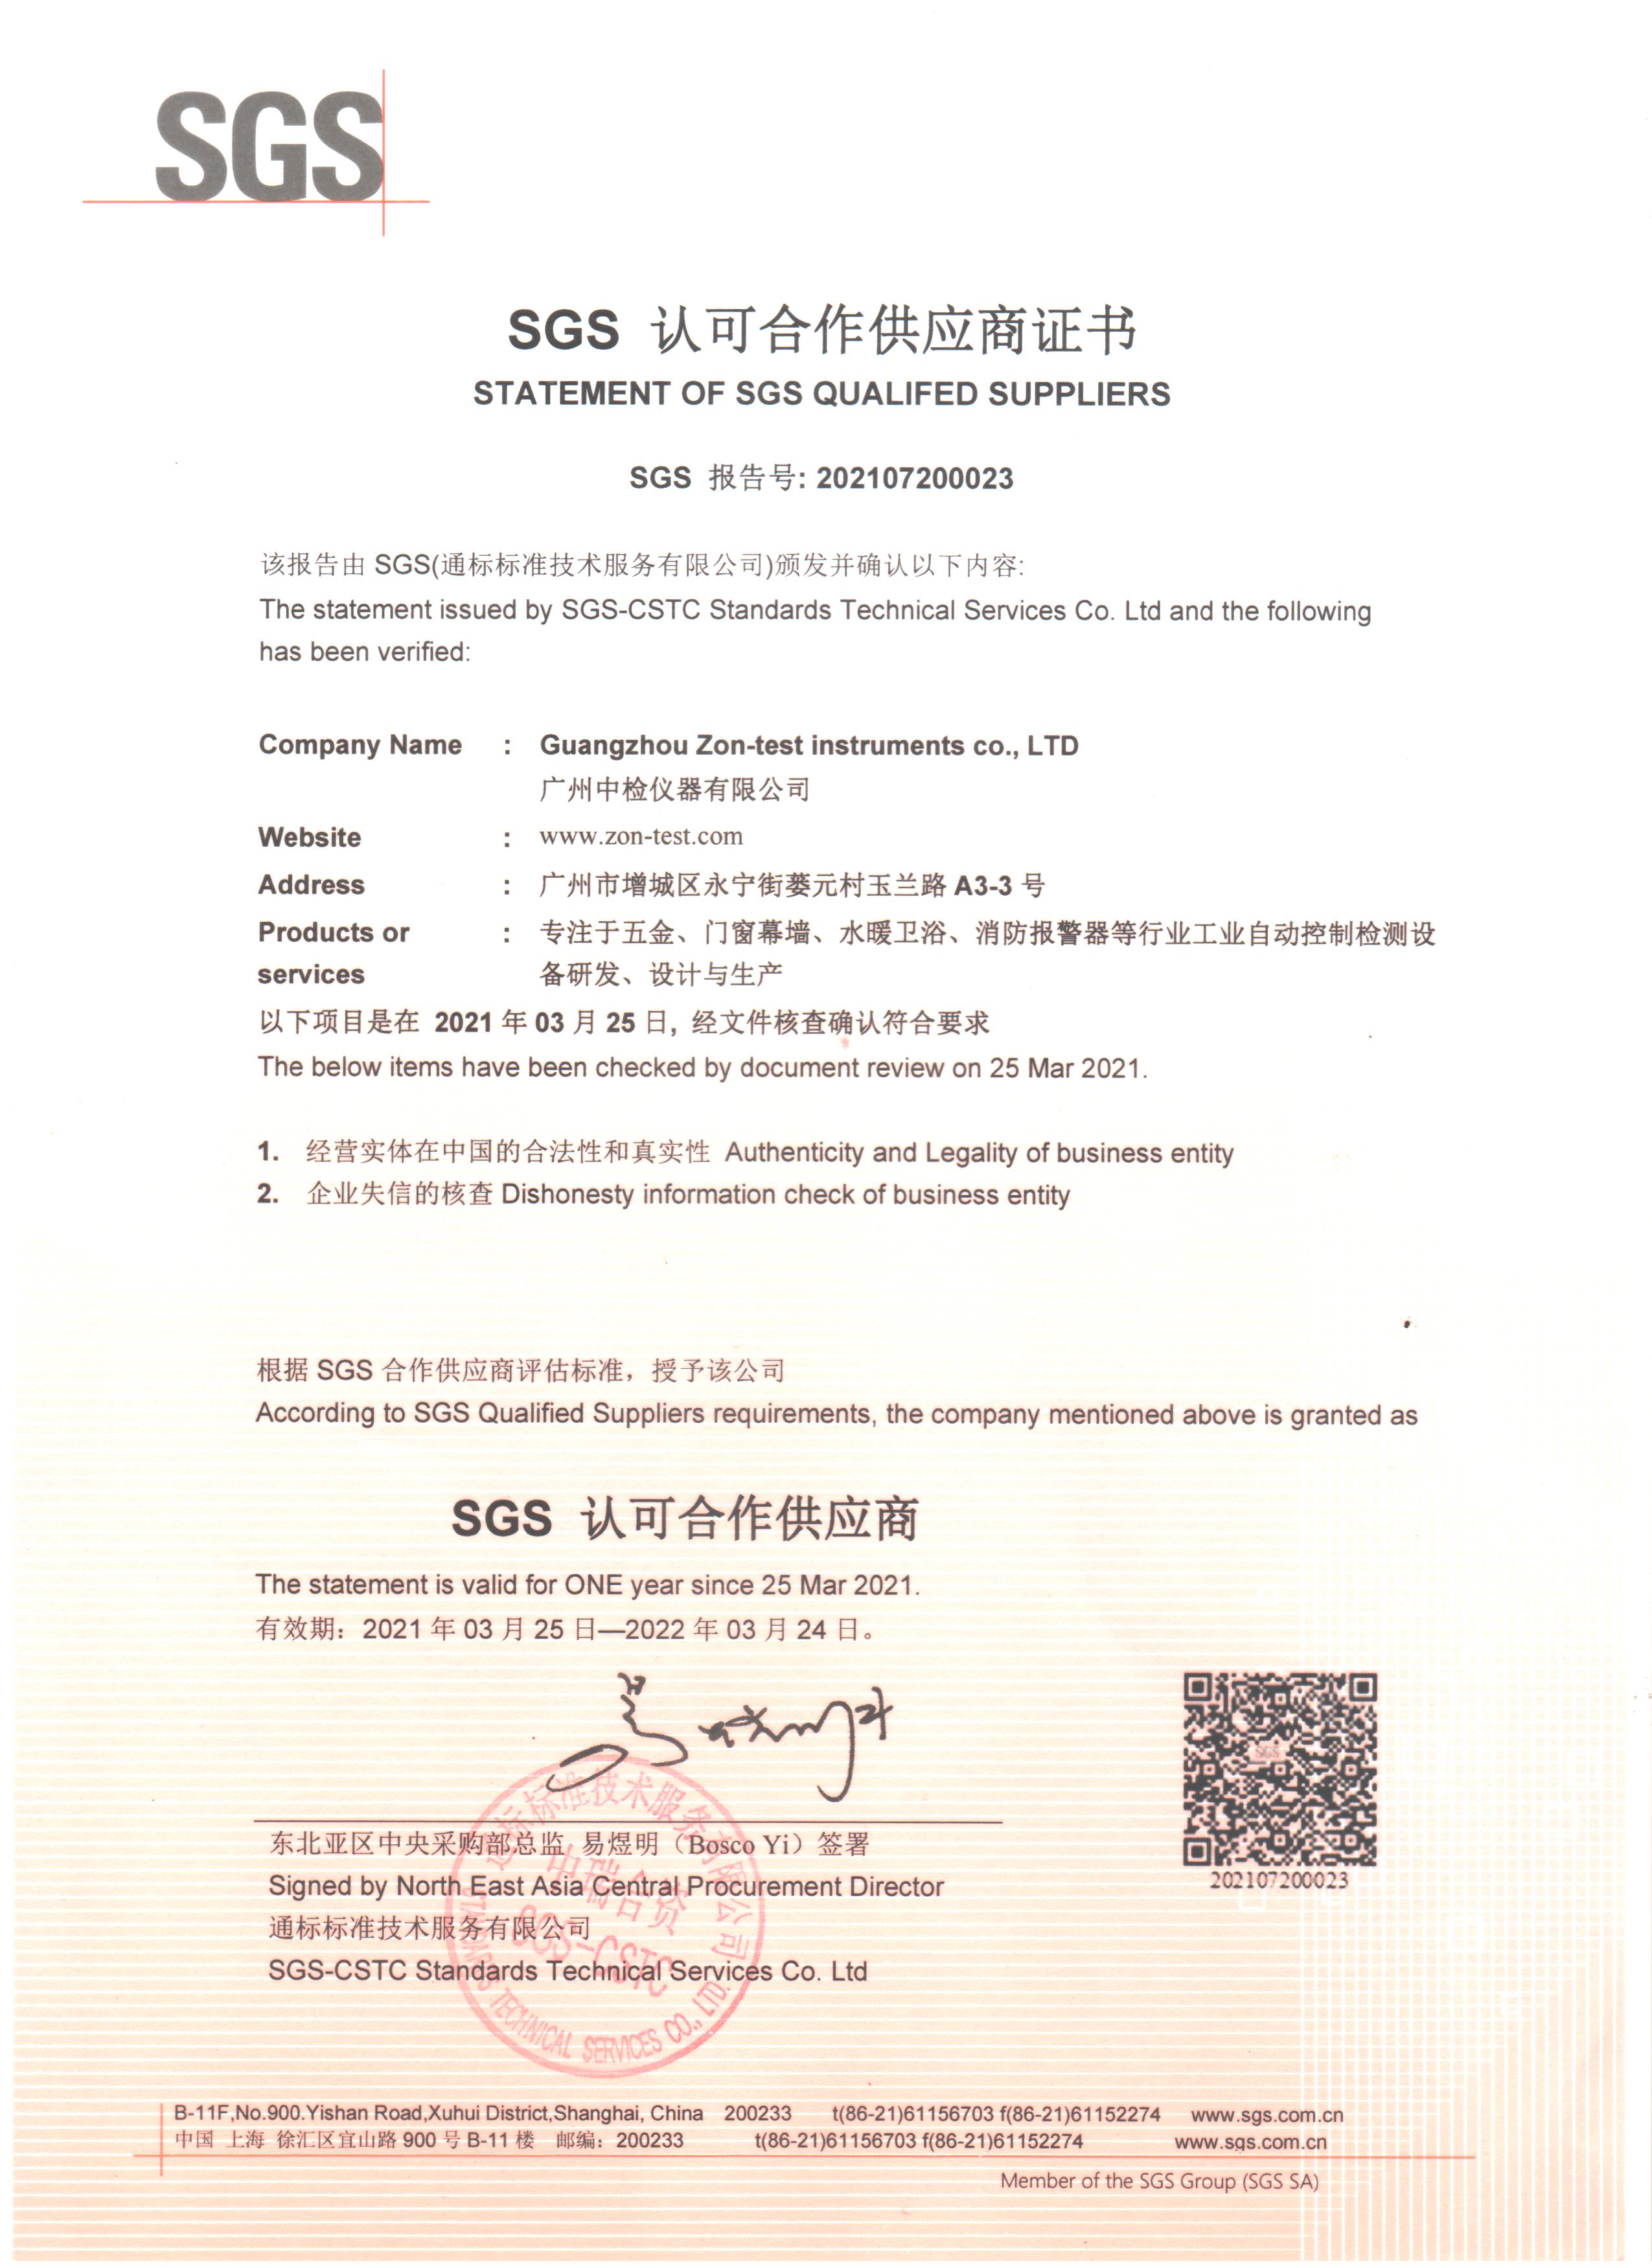 SGS 认可合作供应商证书